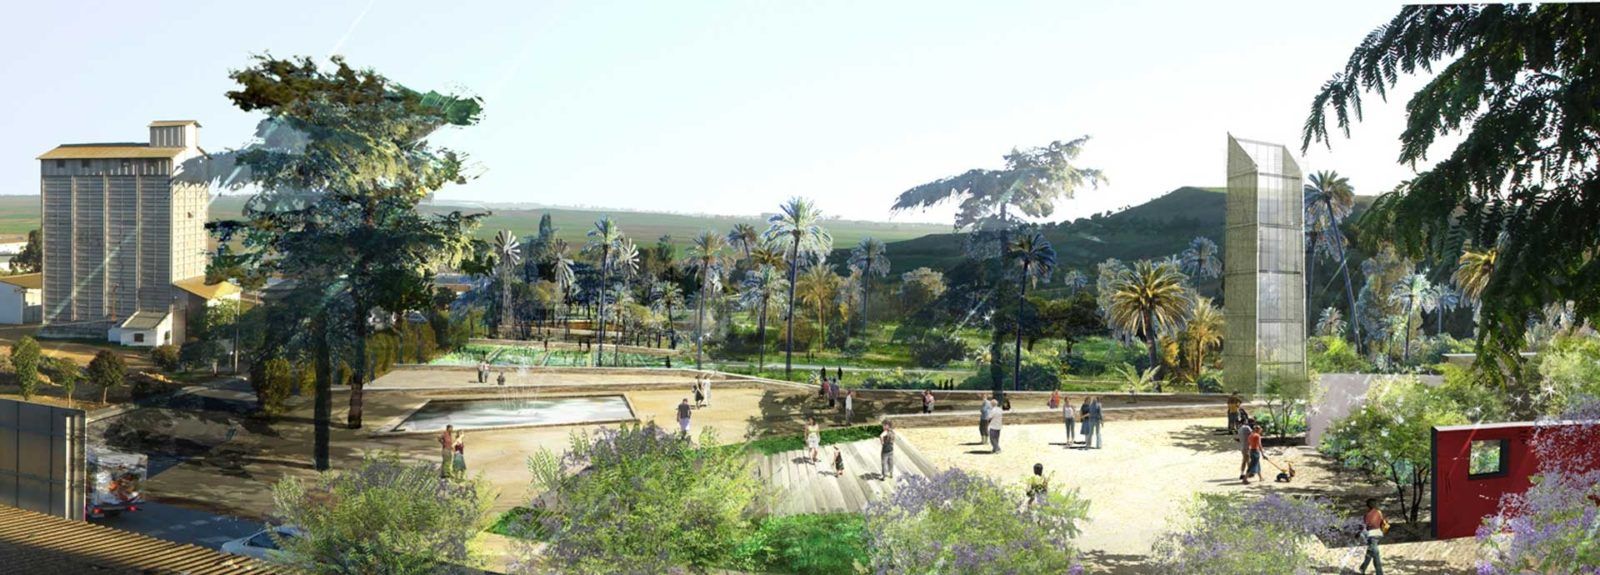 Parc de la Muela - Mutabilis